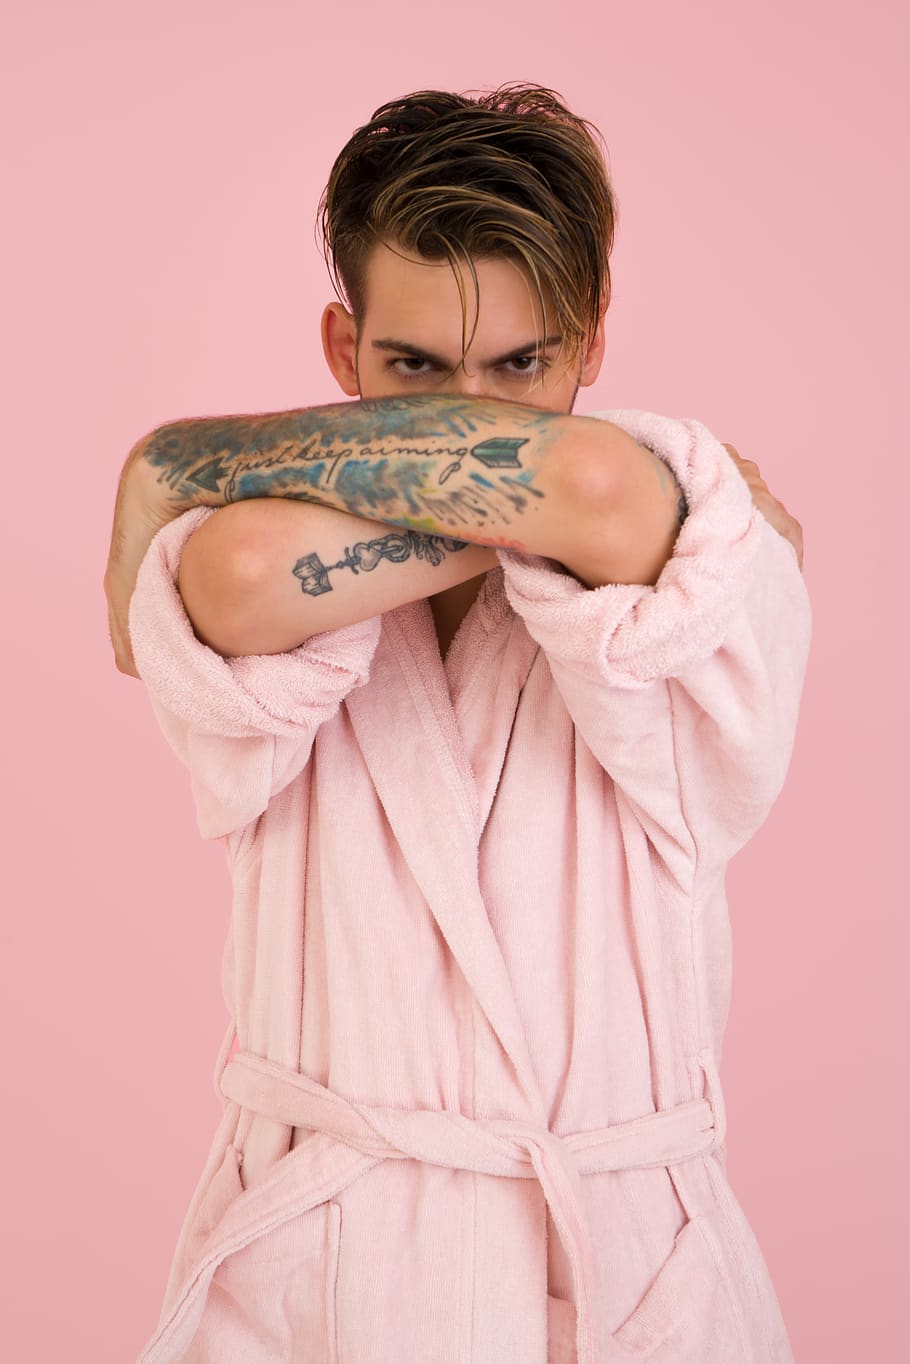 hombre, modelo, bata de baño rosa, tatuaje, fondo rosa, moda, tiro del estudio, una persona, en el interior, fondo de color